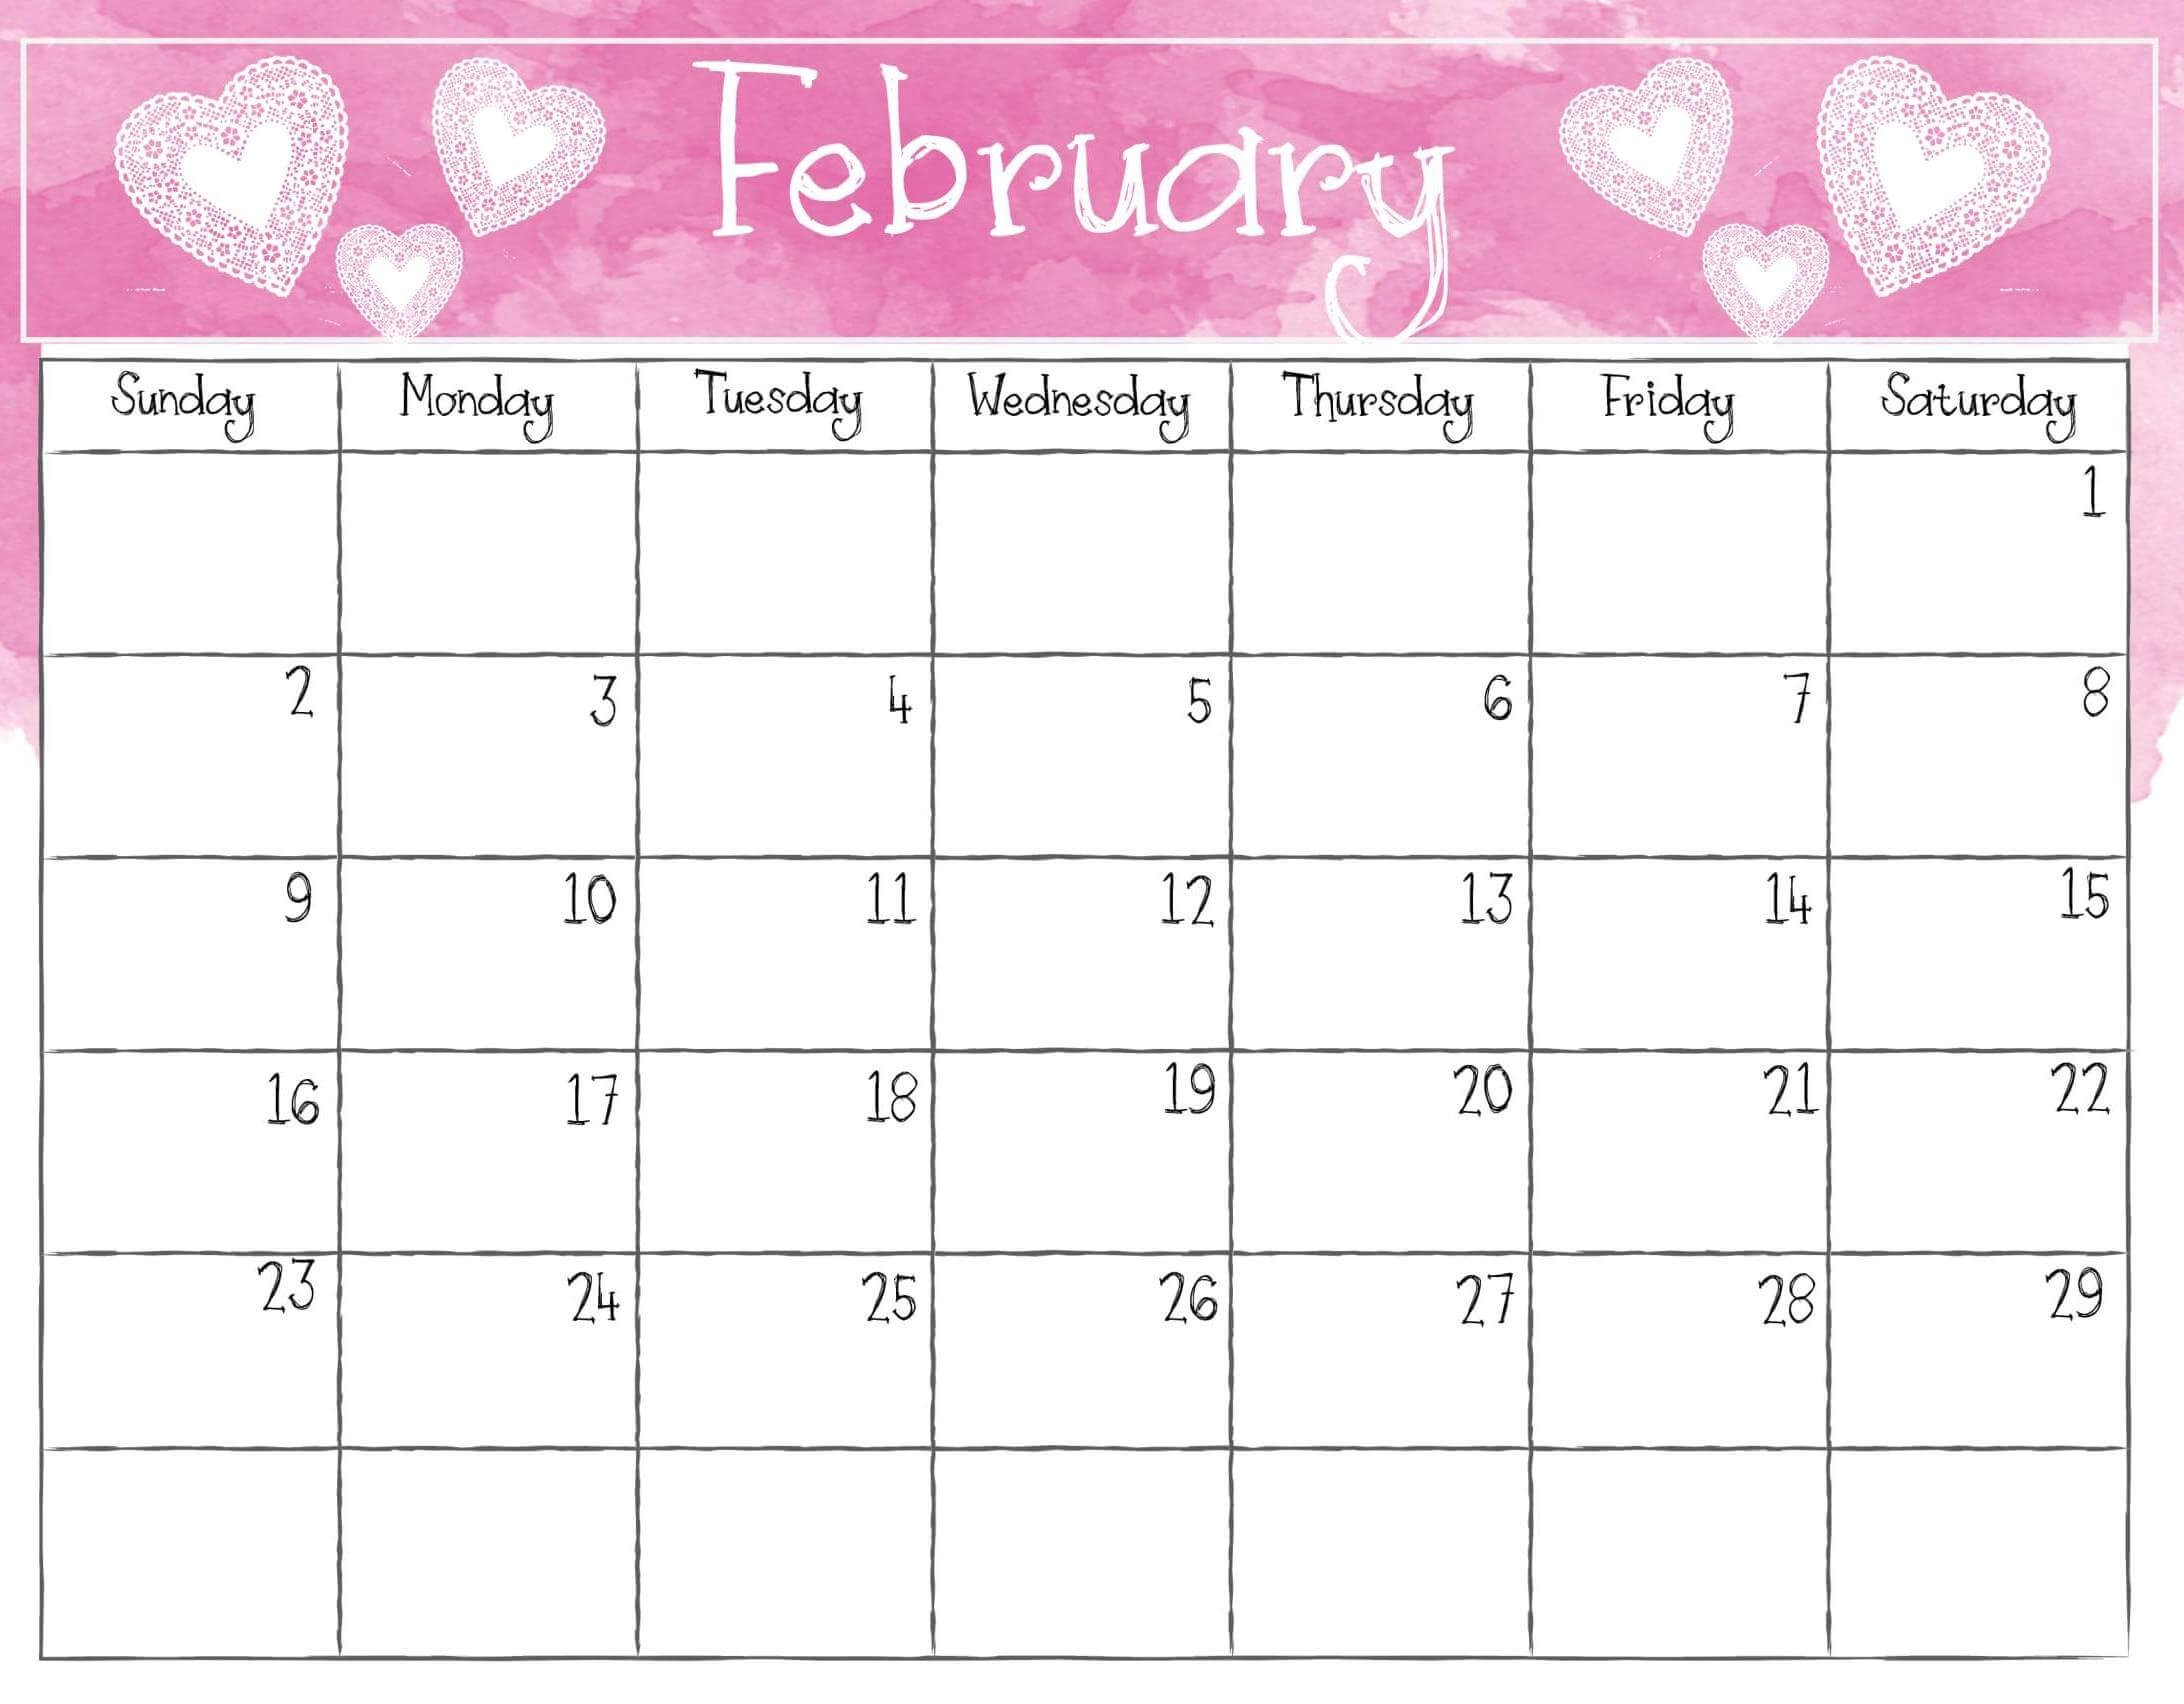 february-2020-calendar-us-holidays-events-list-free-printable-calendar